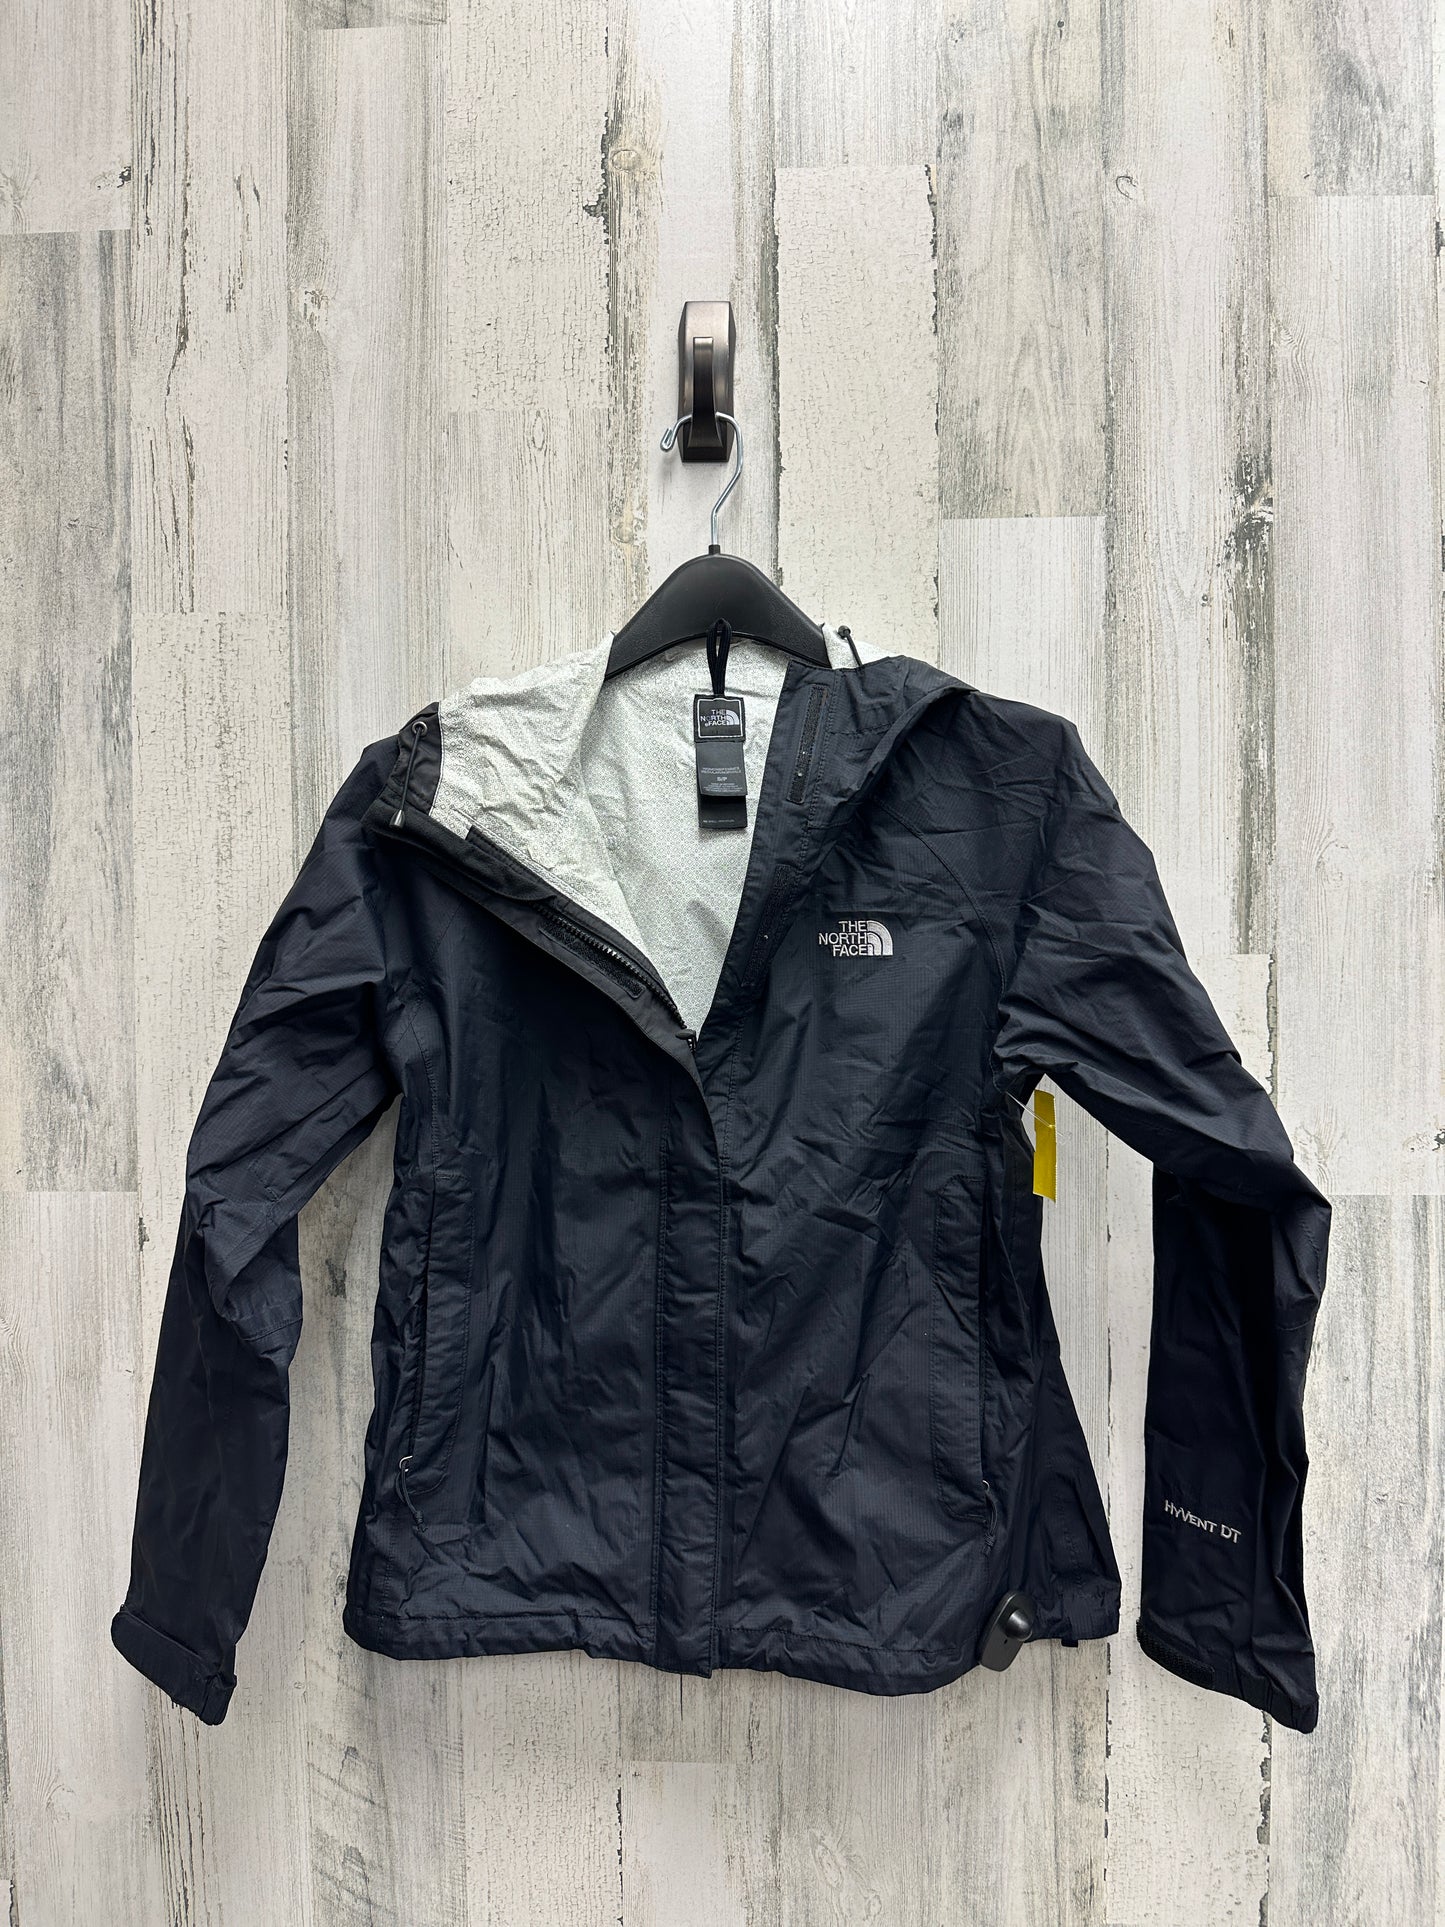 Jacket Windbreaker By North Face  Size: S